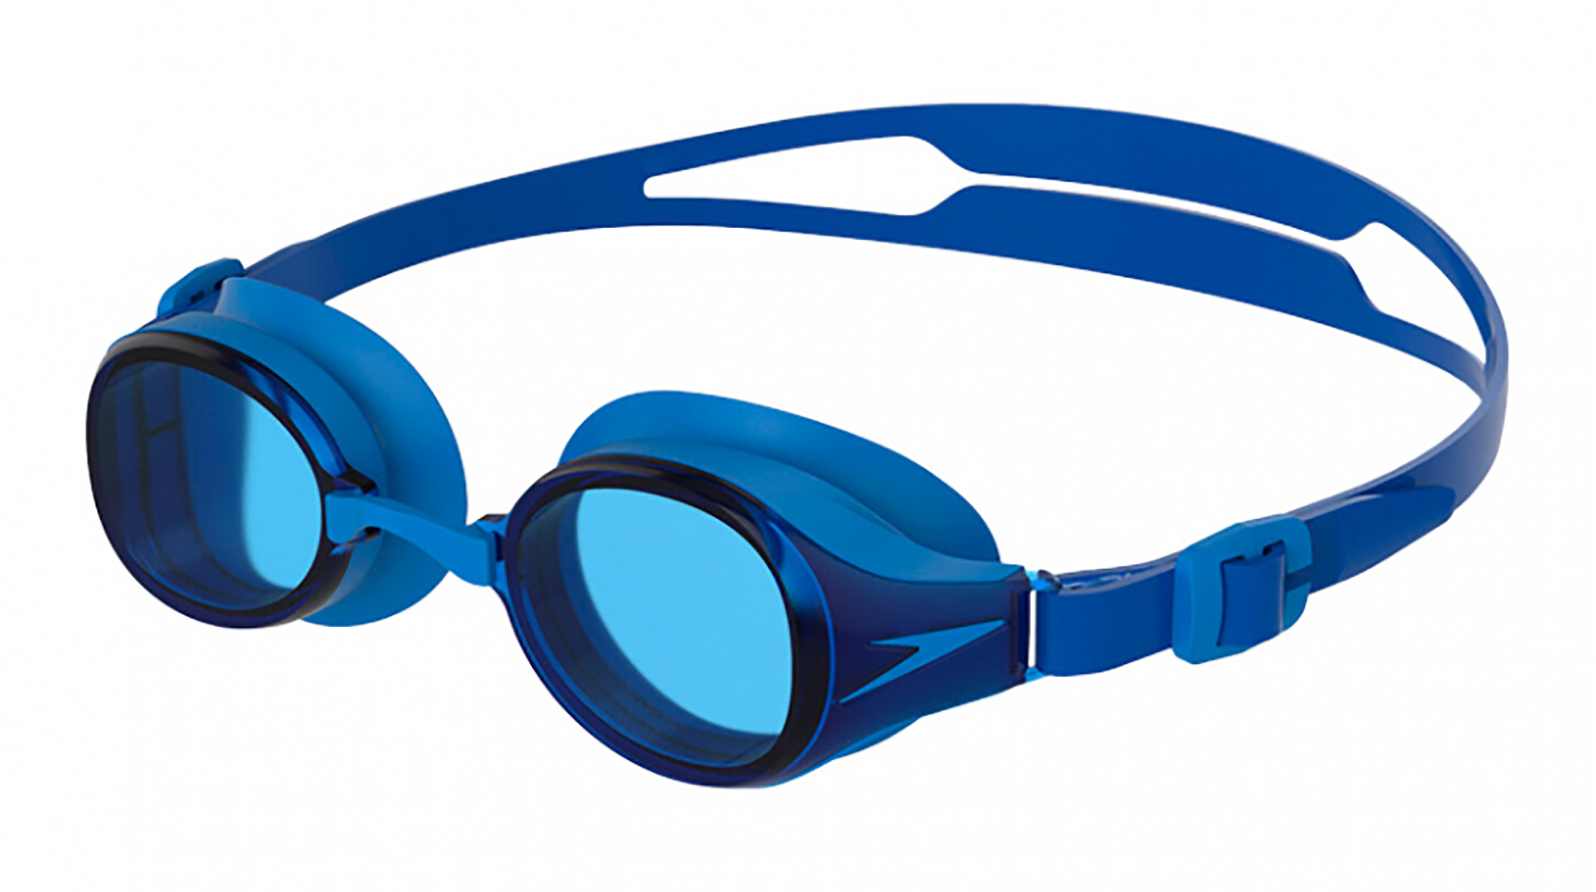 Speedo Очки для плавания Hydropure Optical F809 -5.5 speedo очки для плавания hydropure optical f809 3 5